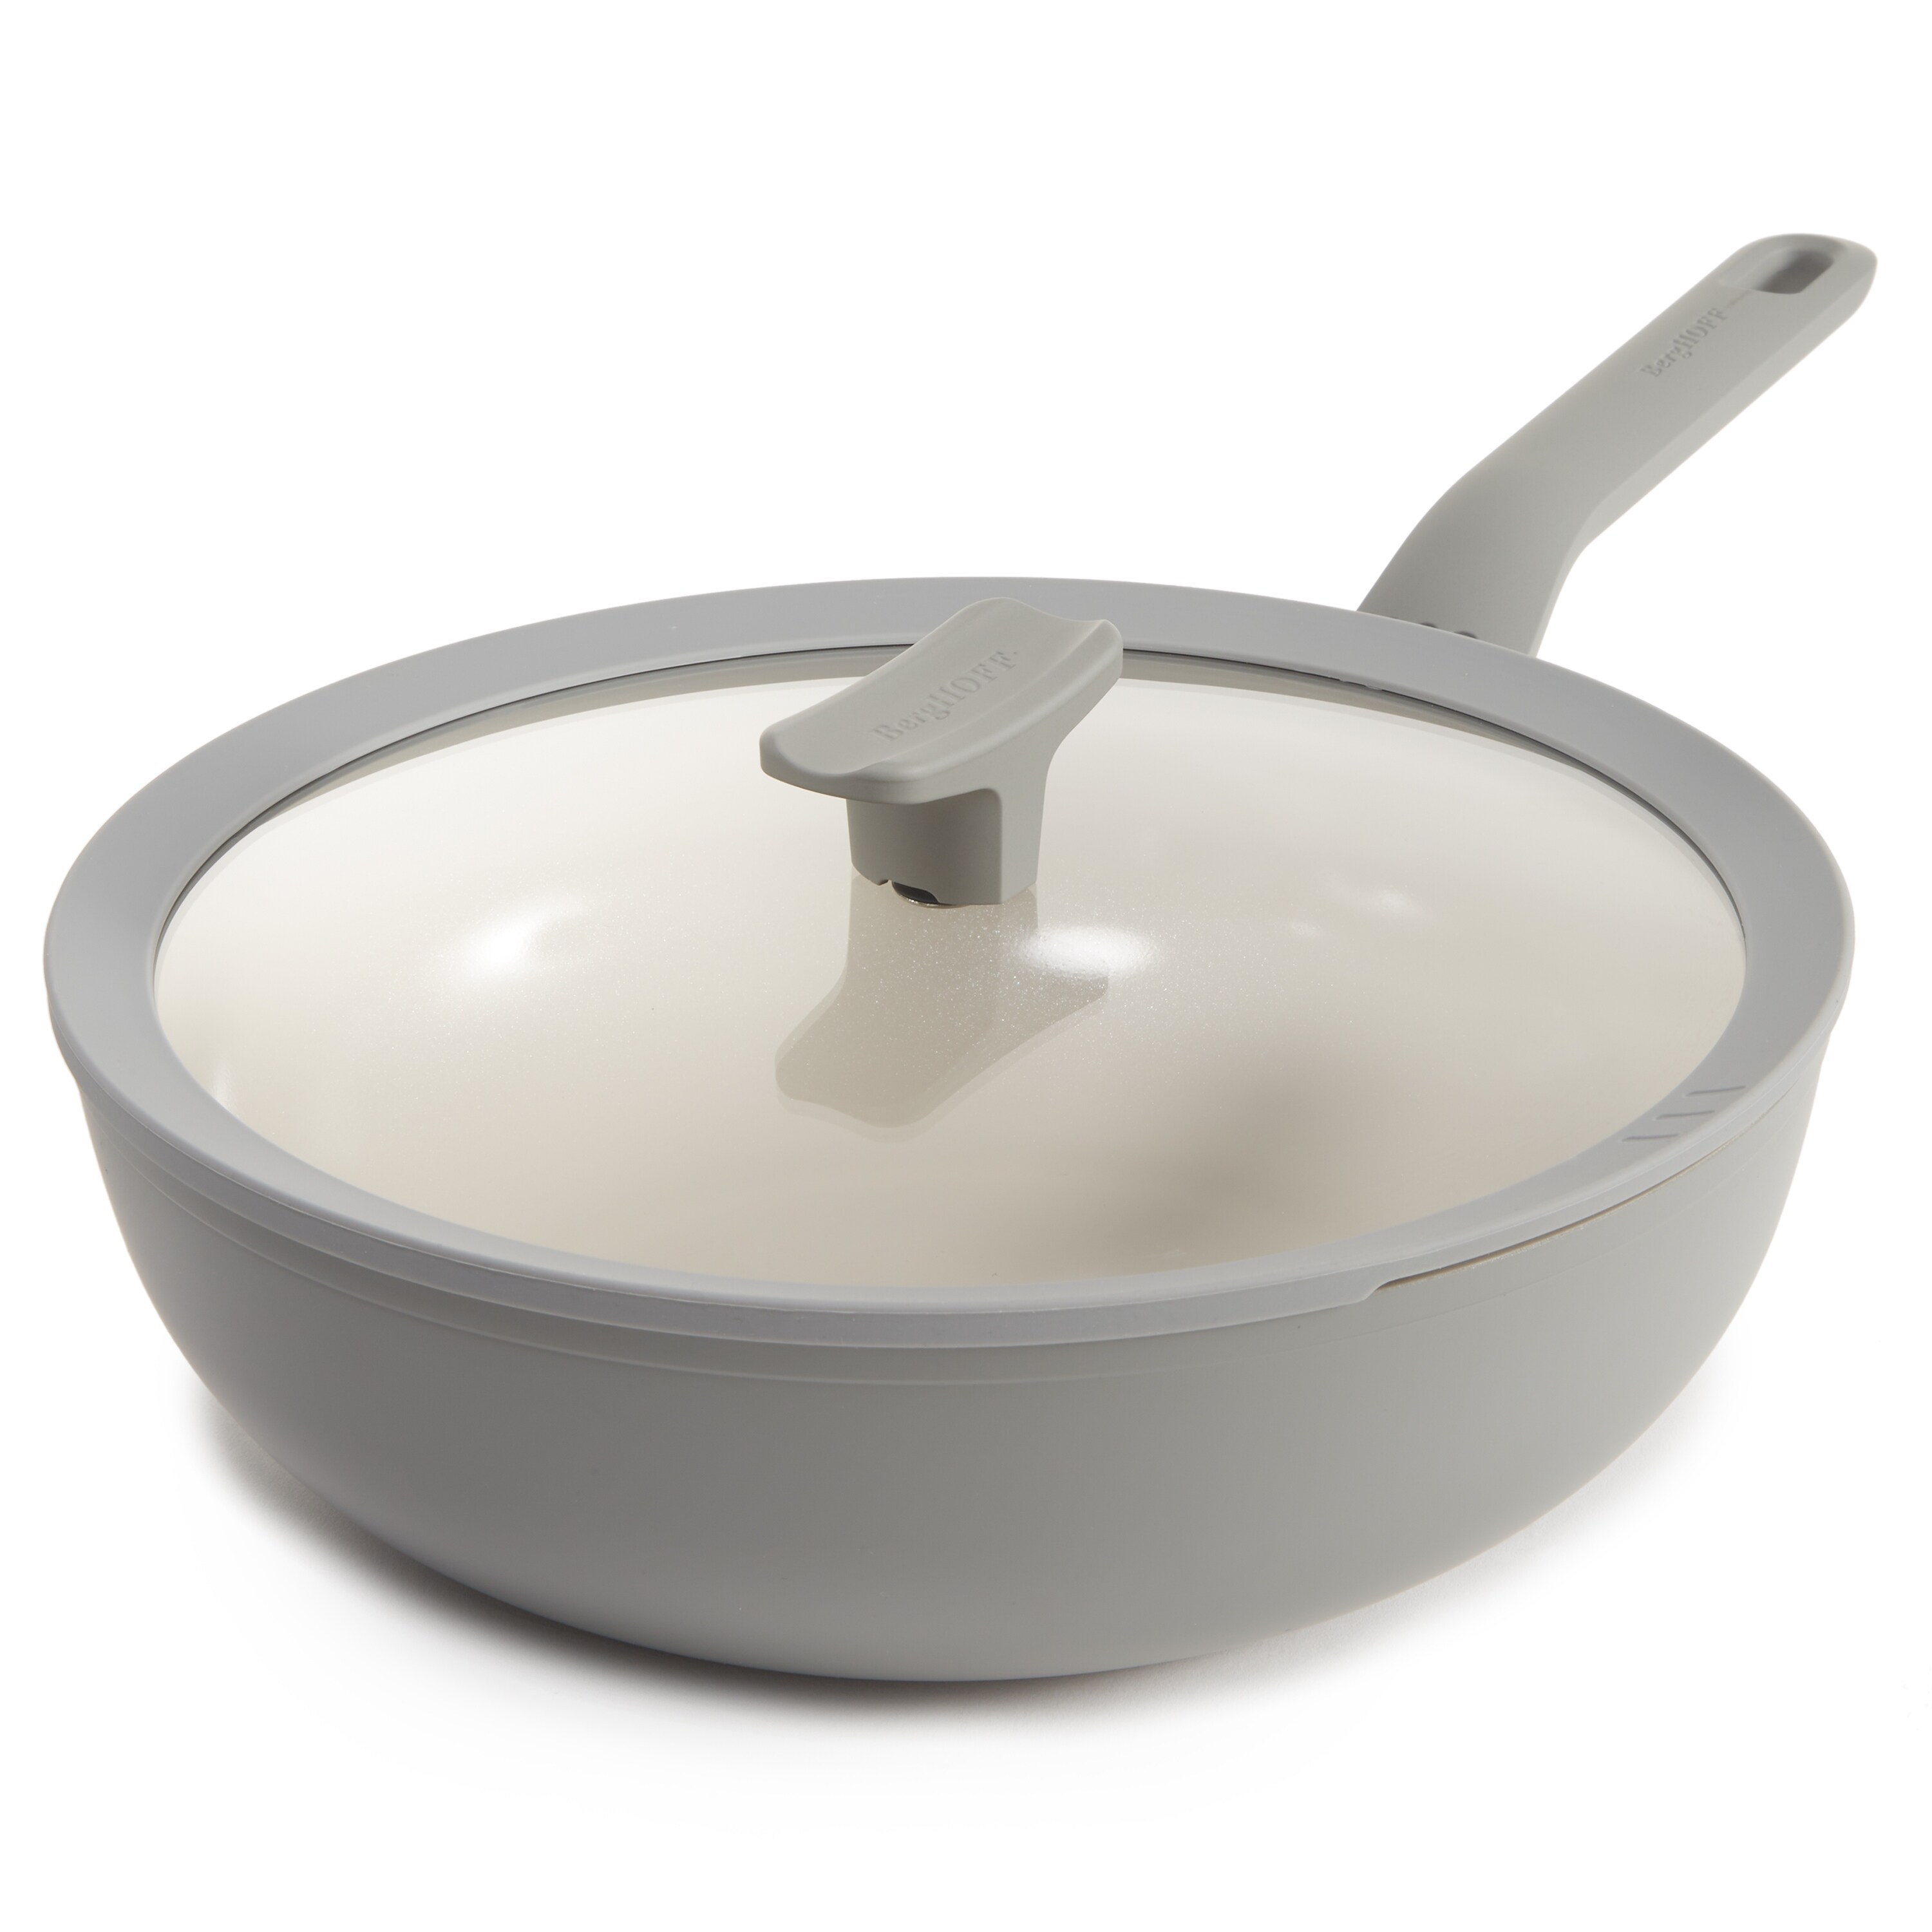 BergHOFF Balance Non-Toxic Non-stick Ceramic Frying Pan 8